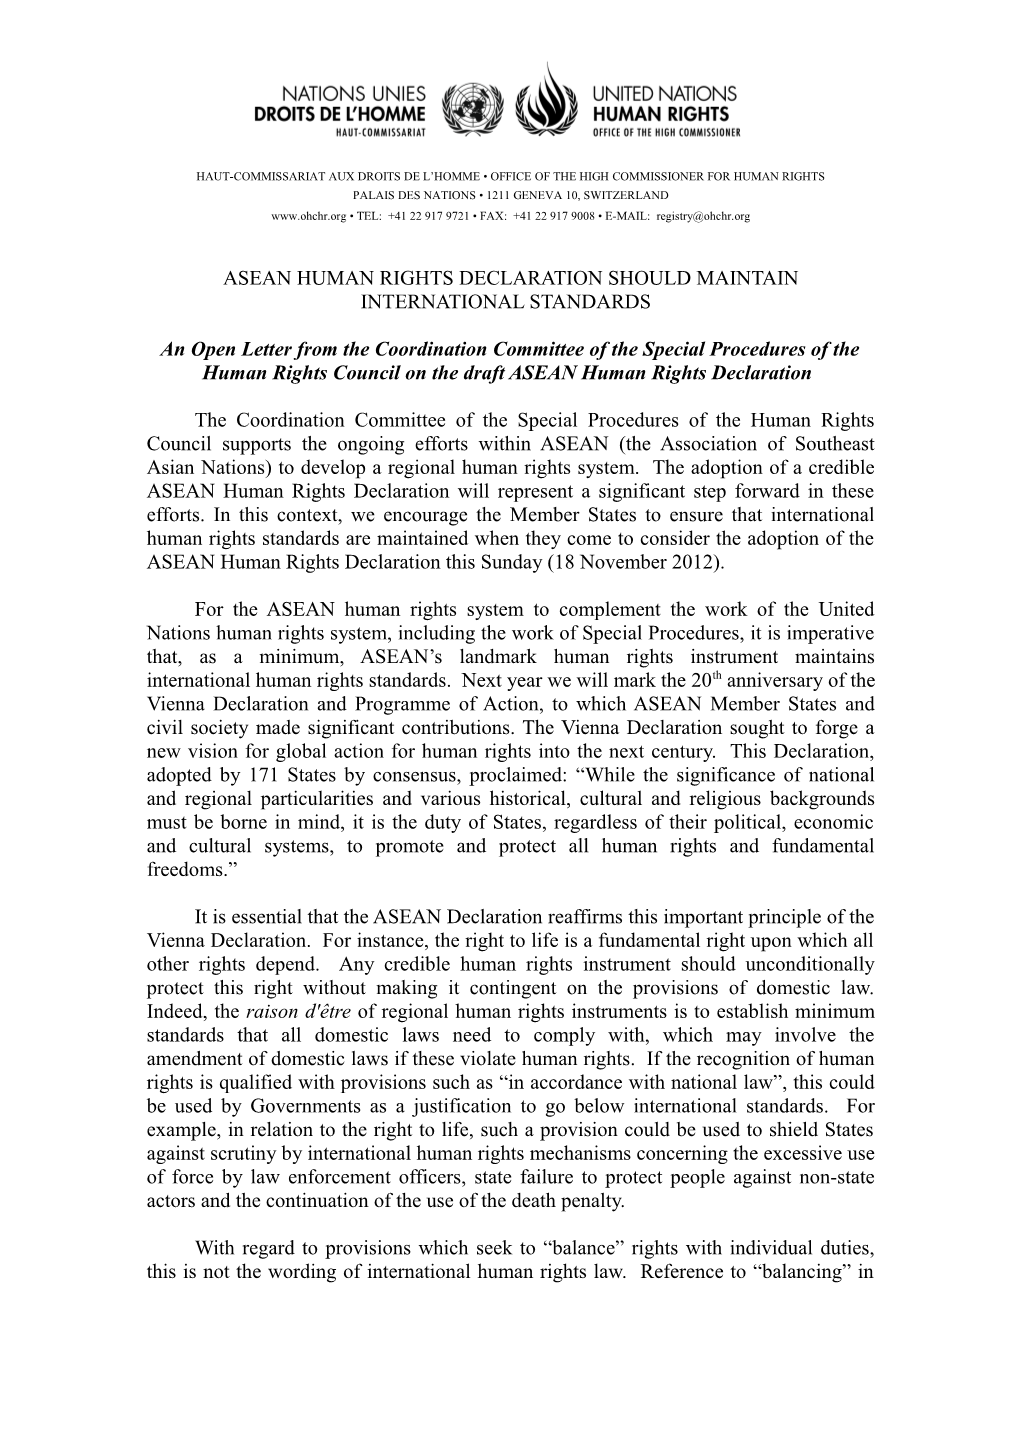 Asean Human Rights Declaration Should Maintain International Standards